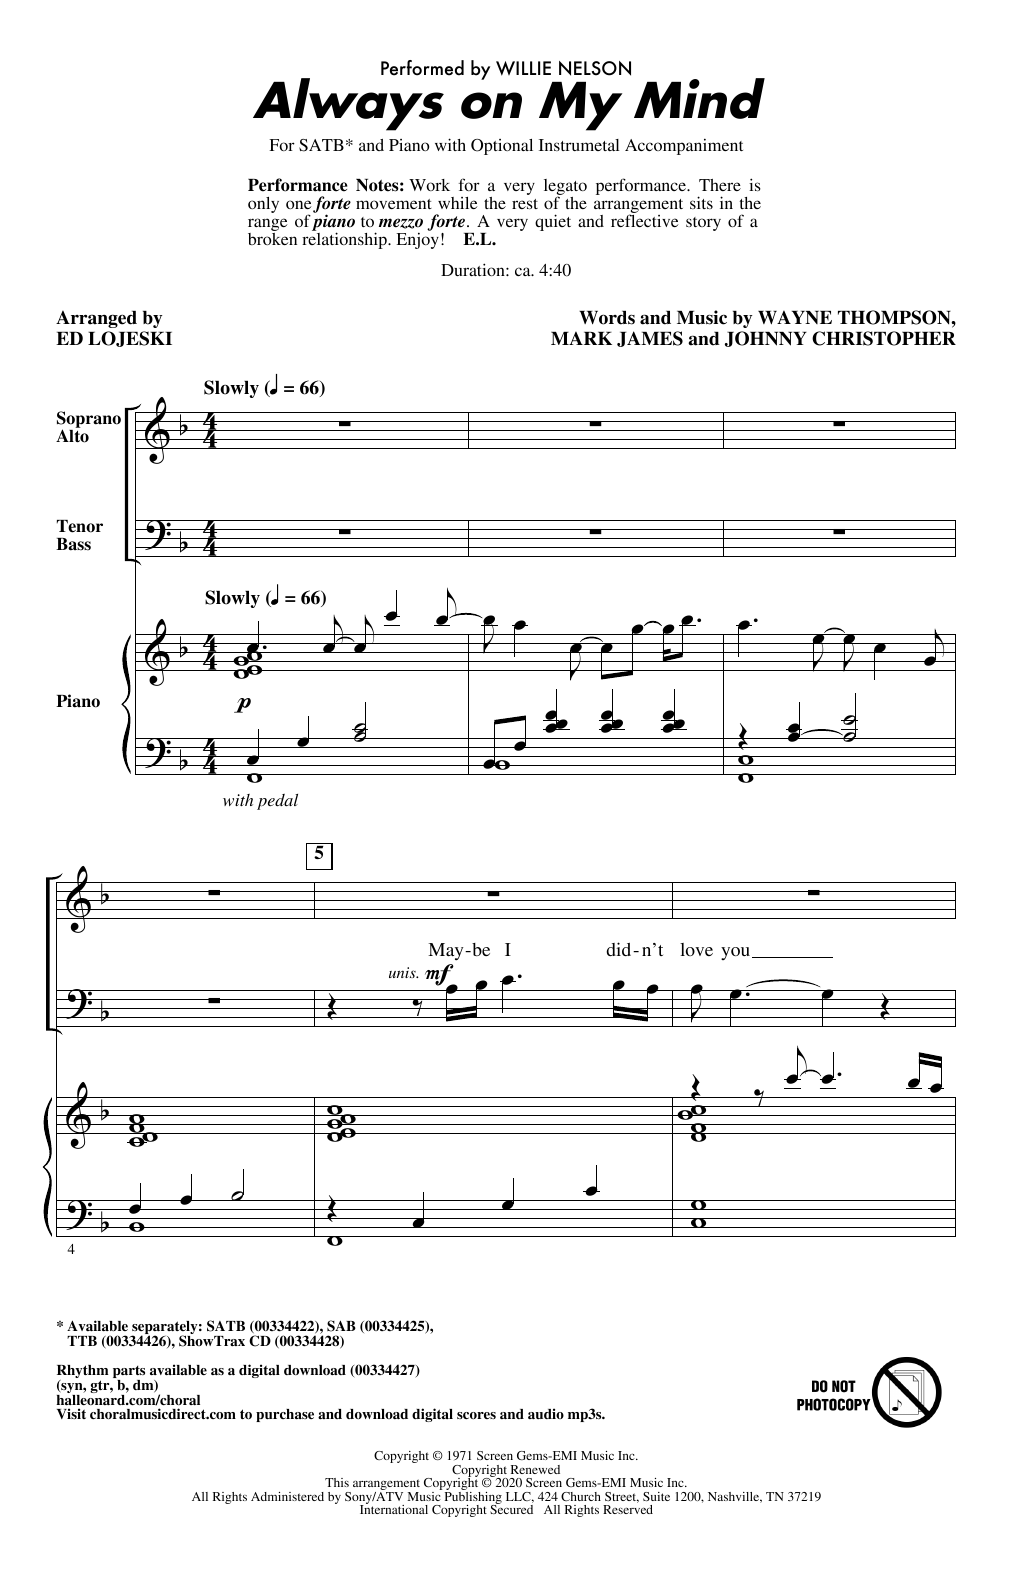 Willie Nelson Always On My Mind (arr. Ed Lojeski) Sheet Music Notes & Chords for TTBB Choir - Download or Print PDF